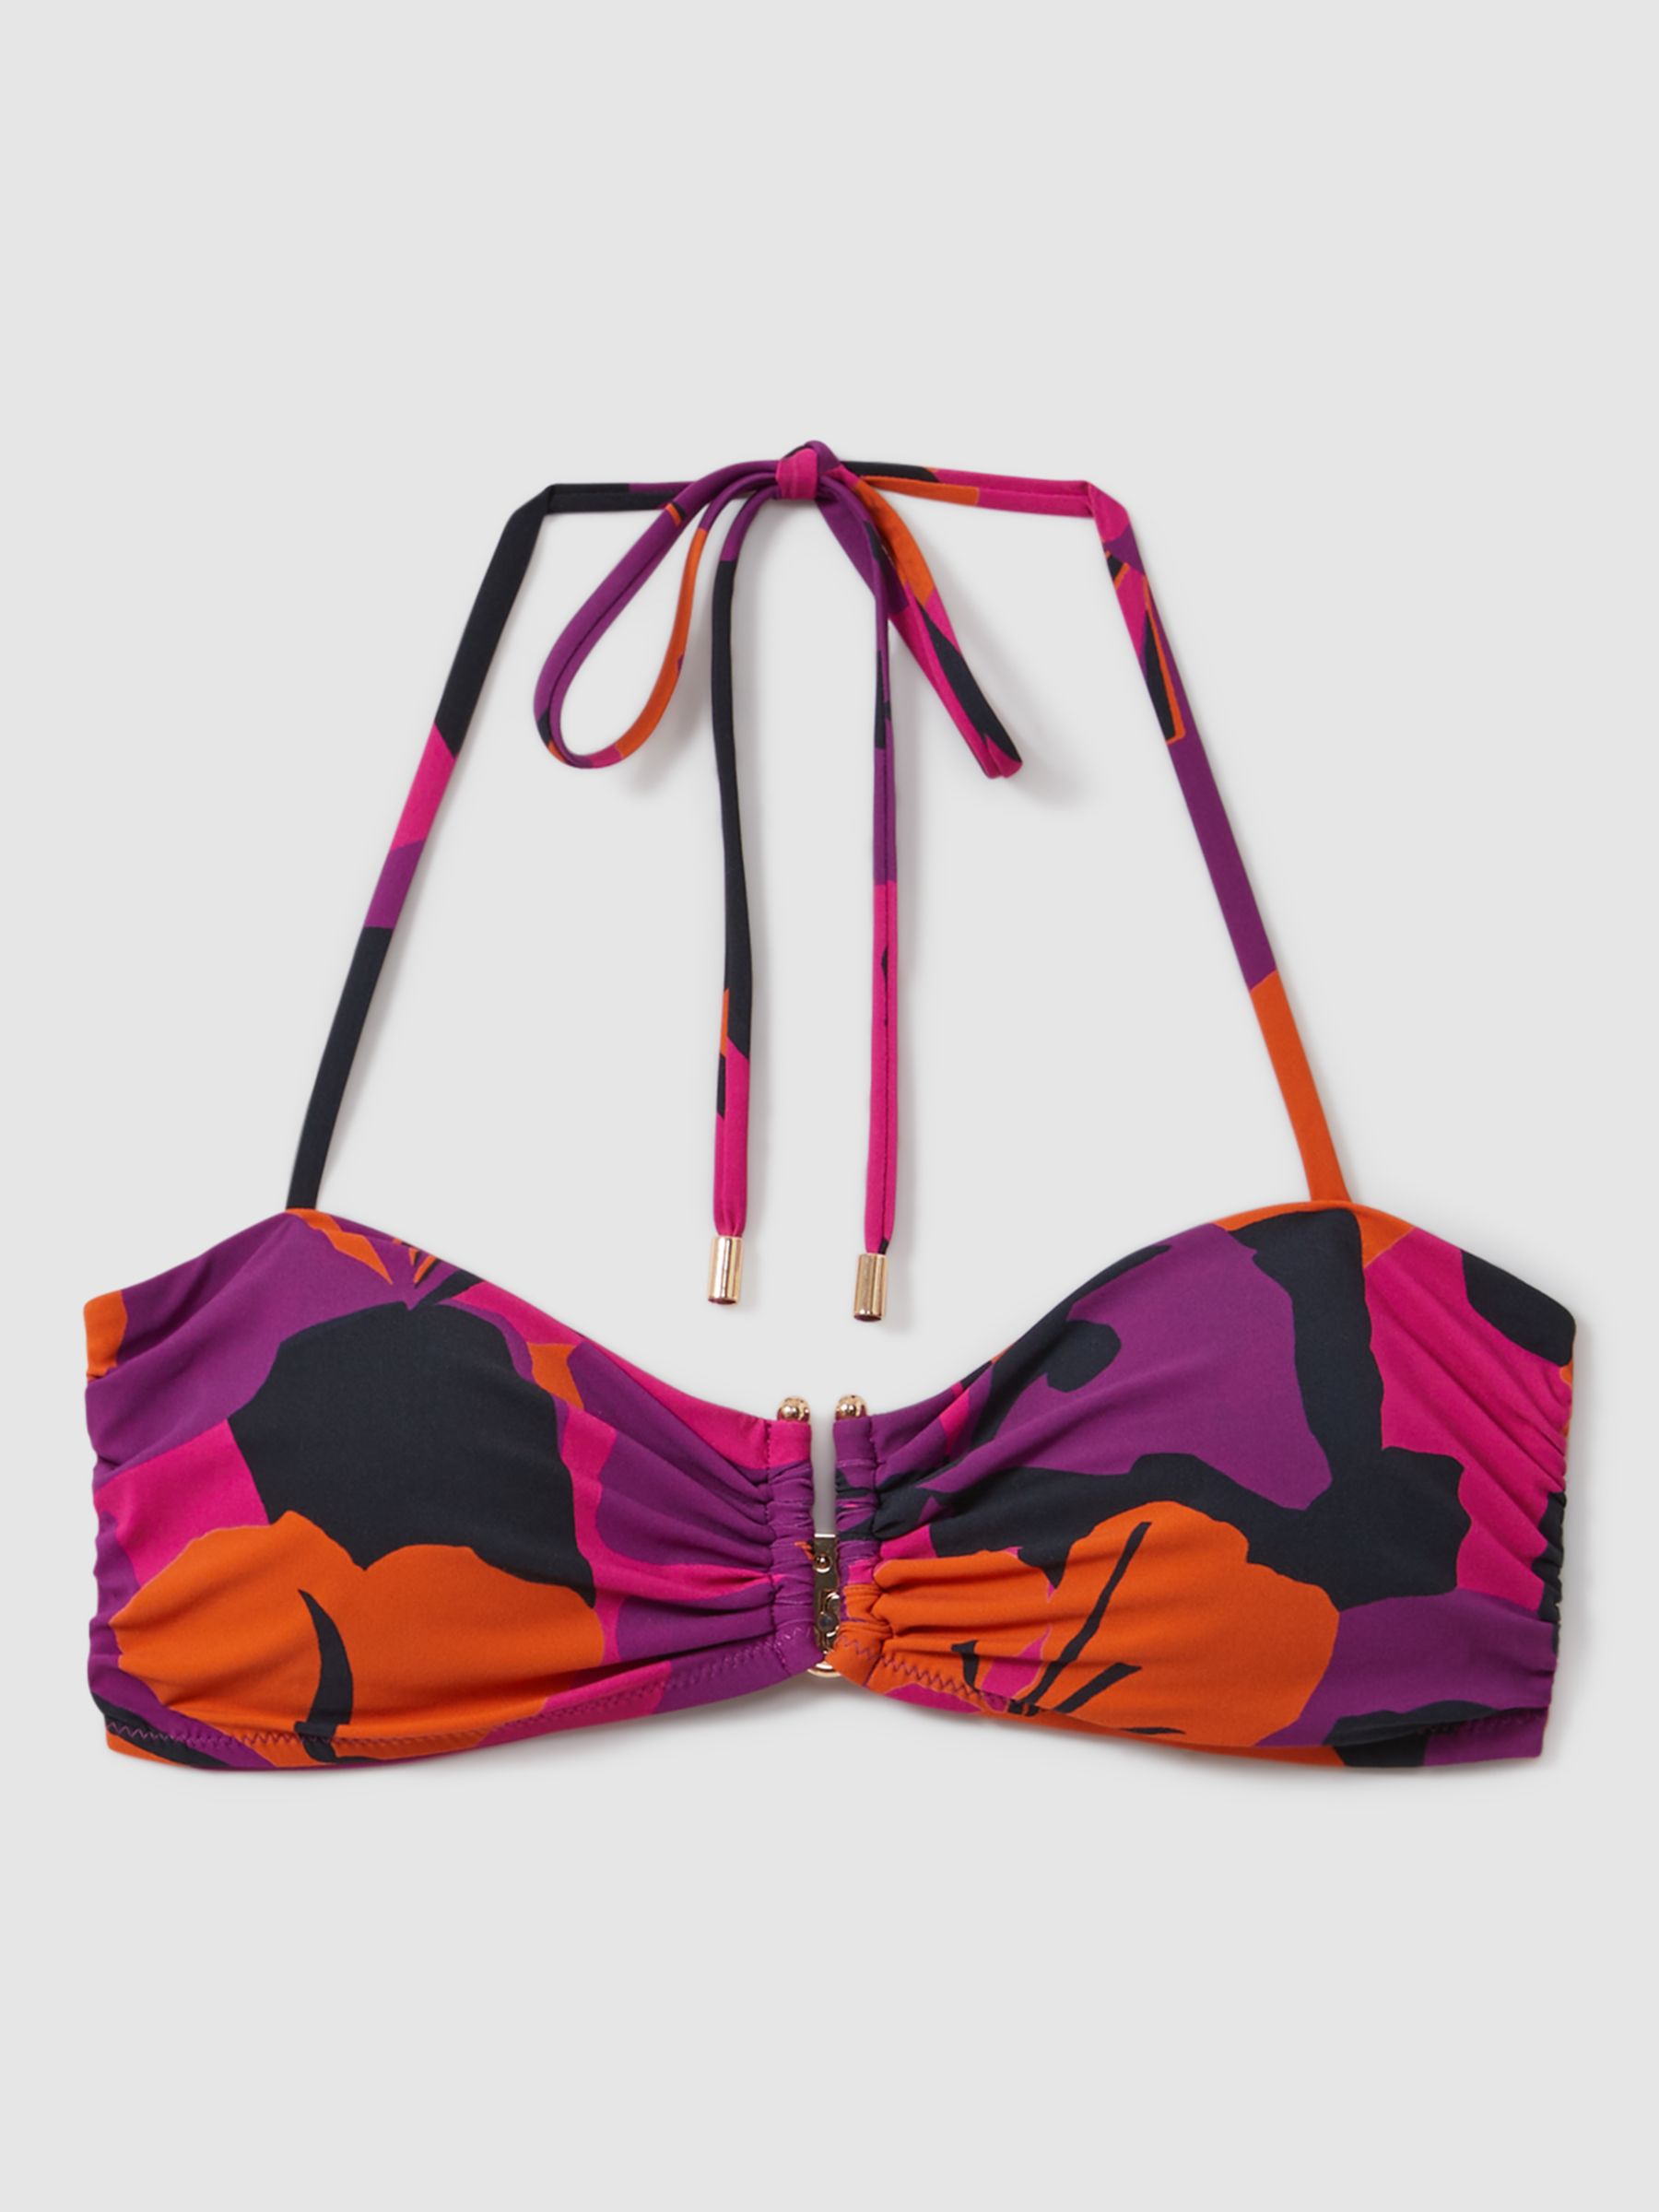 FLORERE Abstract Floral Print Bandeau Bikini Top, Pink/Orange, 8